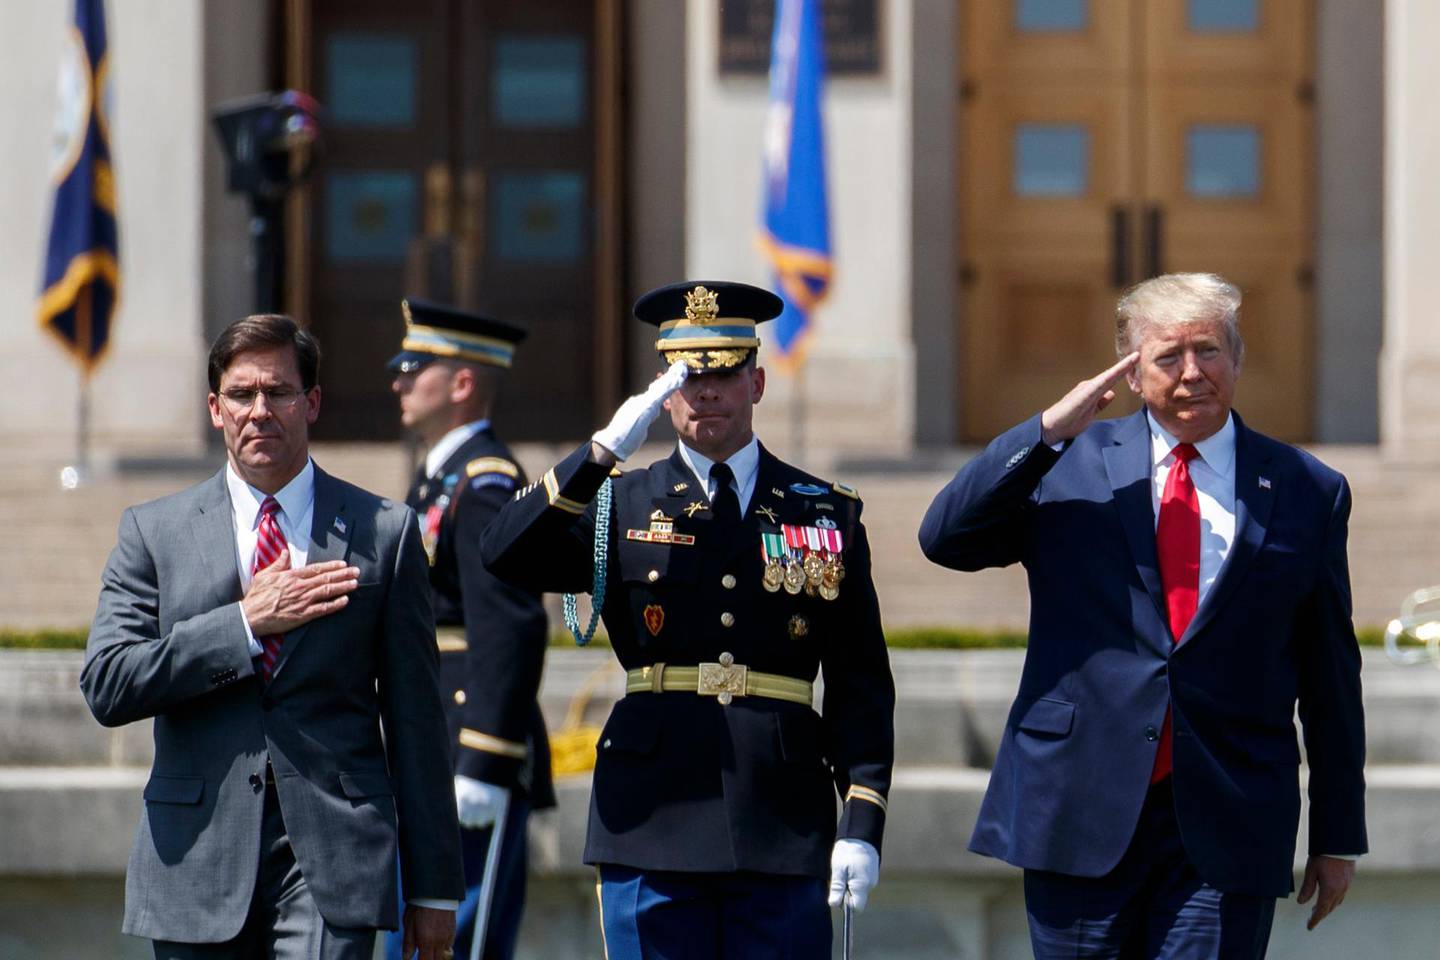 epa07740378 US President Donald J. Trump (R) and Secretary of Defense Mark Esper (L) participate in a full honors welcome ceremony at the Pentagon in Arlington, Virginia, USA, 25 July 2019.  EPA/SHAWN THEW   ALTERNATIVE CROP